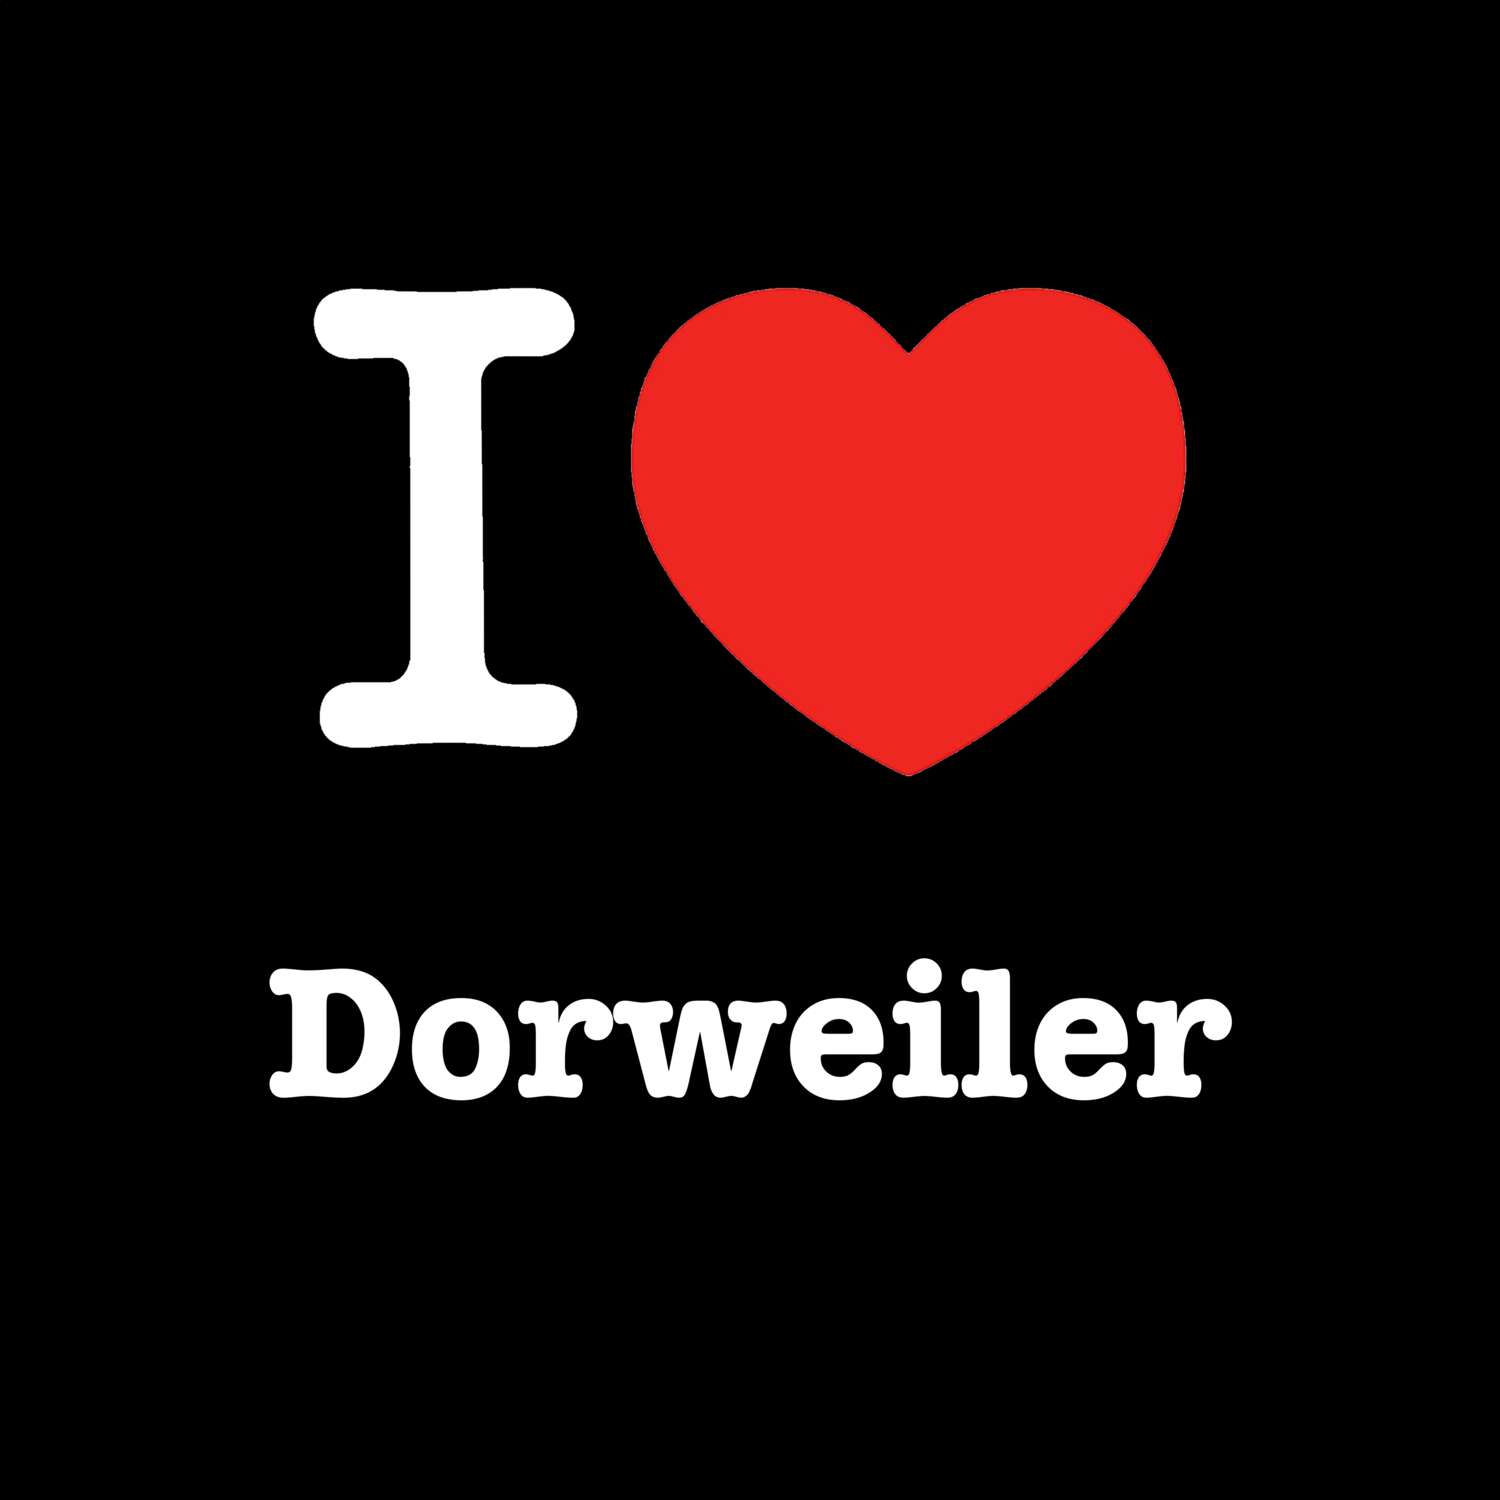 Dorweiler T-Shirt »I love«